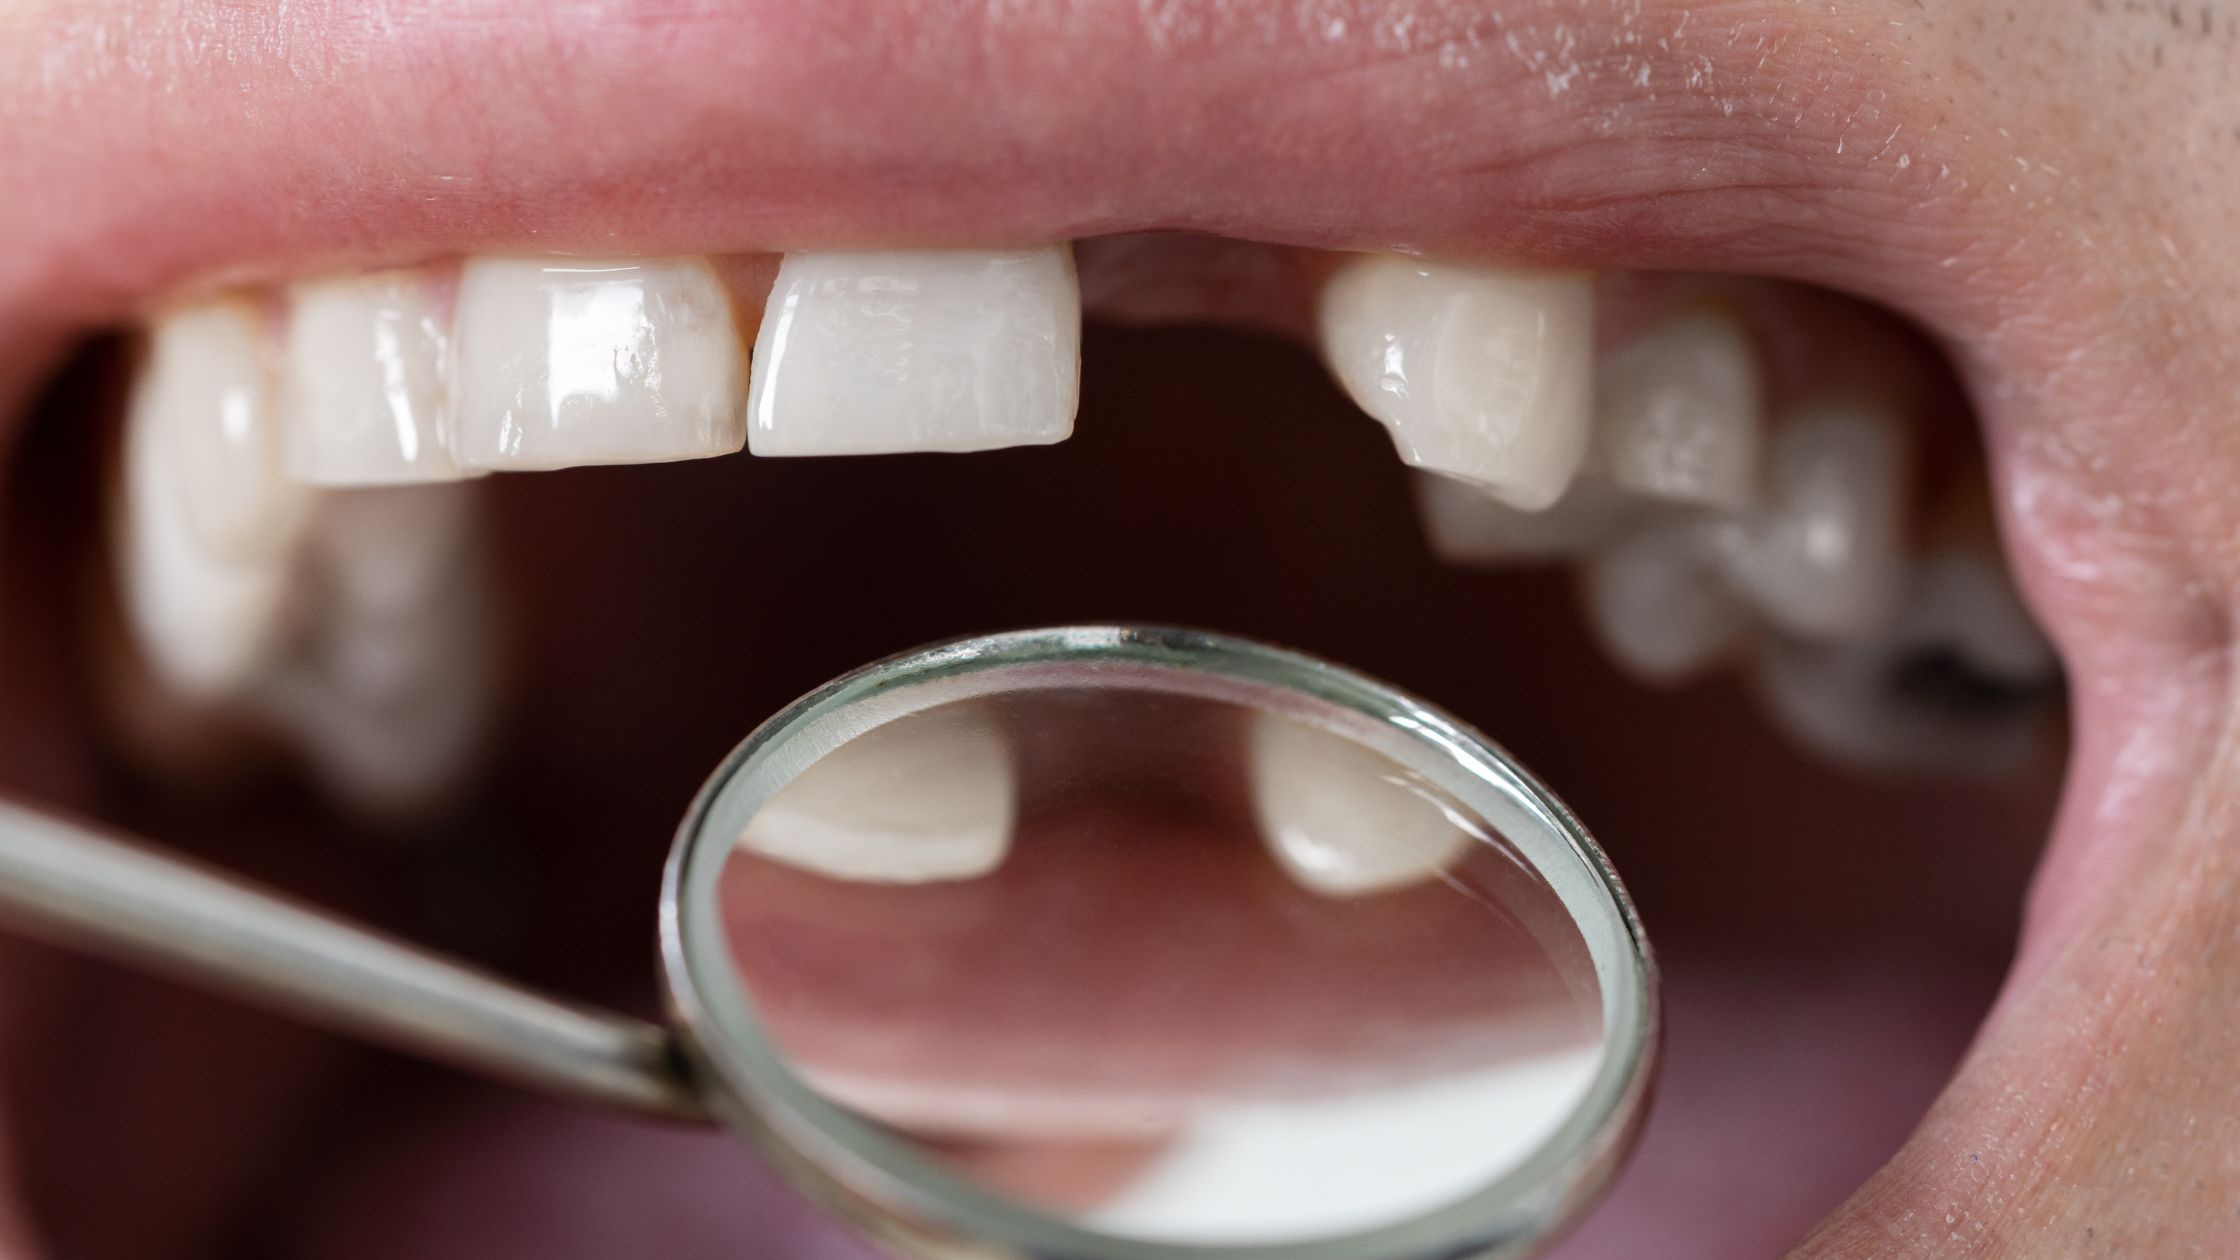 Restorative Dentistry General - Missing Tooth